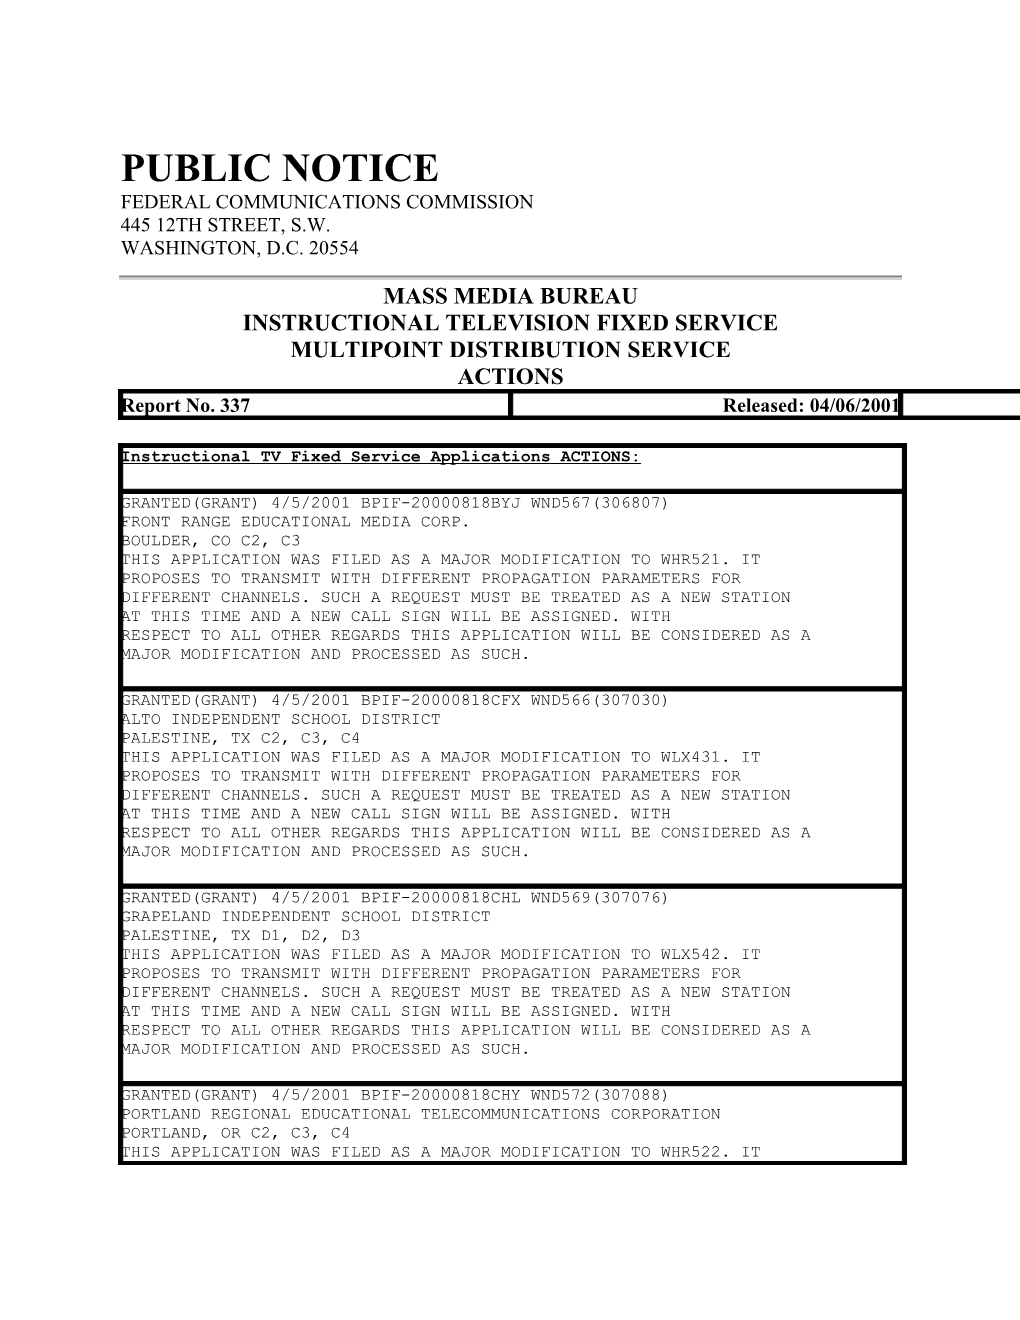 Public Notice Federal Communications Commission 445 12Th Street, S.W. Washington, D.C. 20554